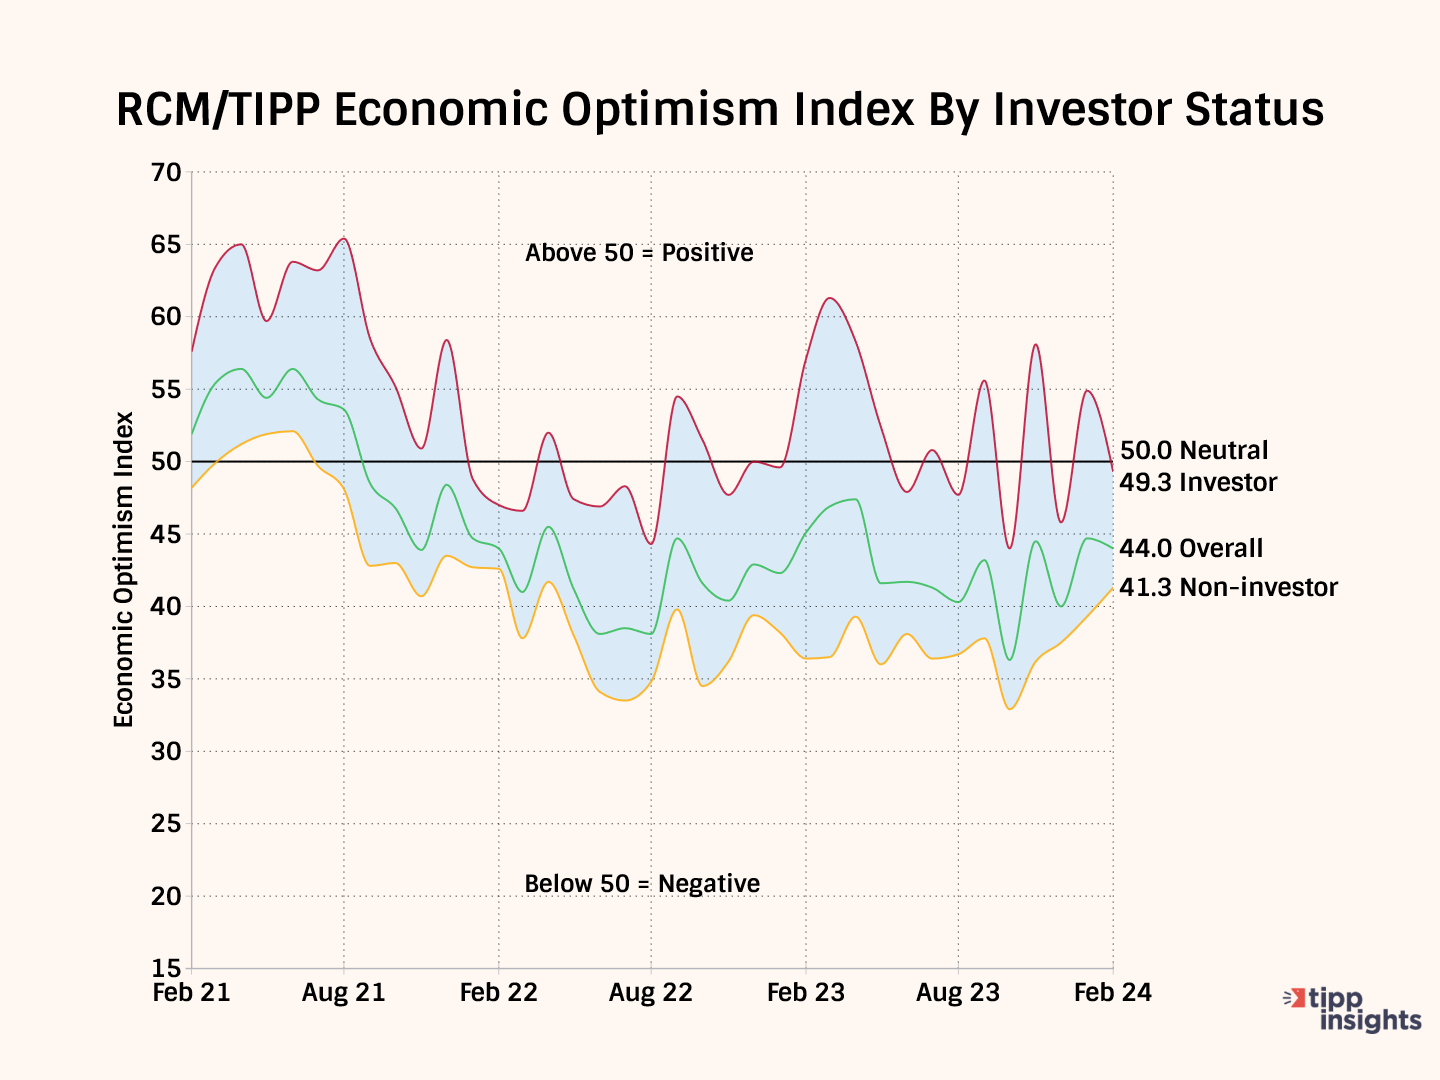 RCM/TIPP Economic Optimism Index Weakens Slightly In February